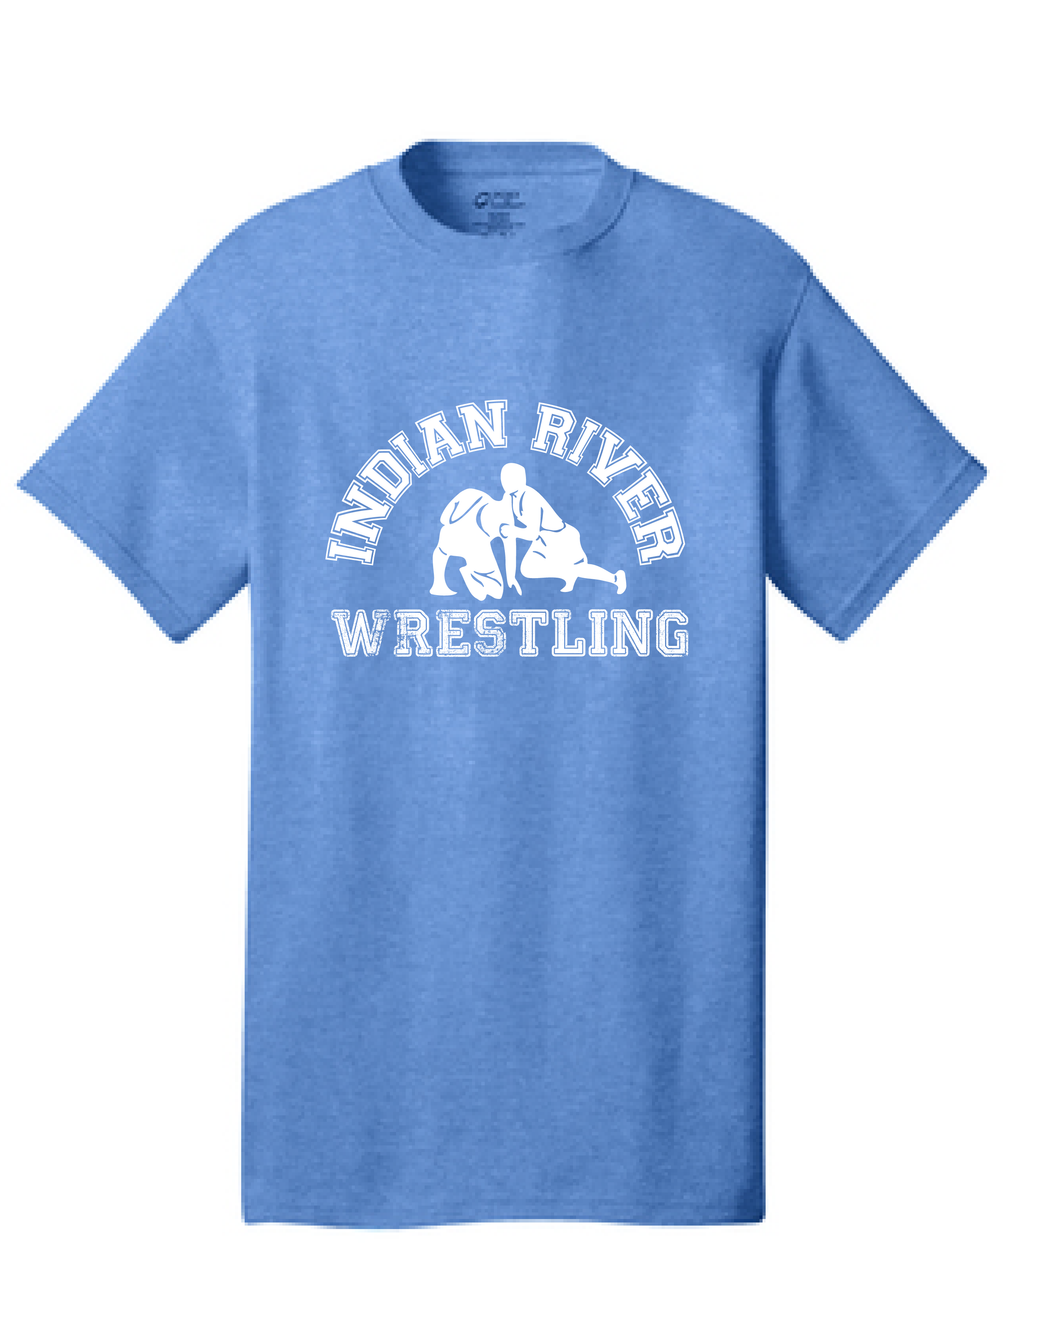 Cotton Short Sleeve Shirt / Heather Royal / Indian River Wrestling - Fidgety